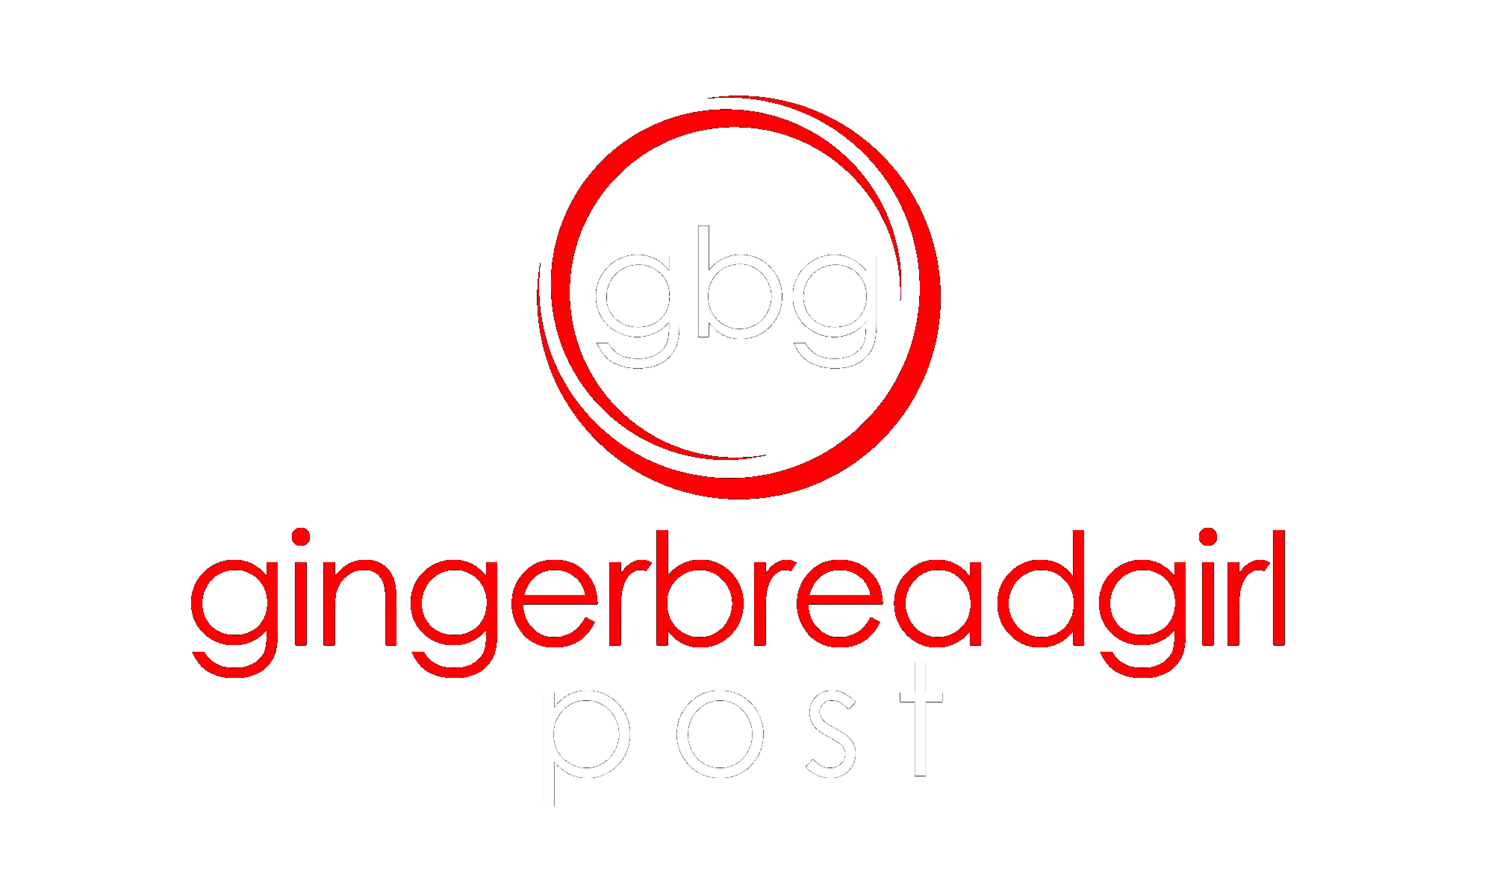 Gingerbreadgirl Post